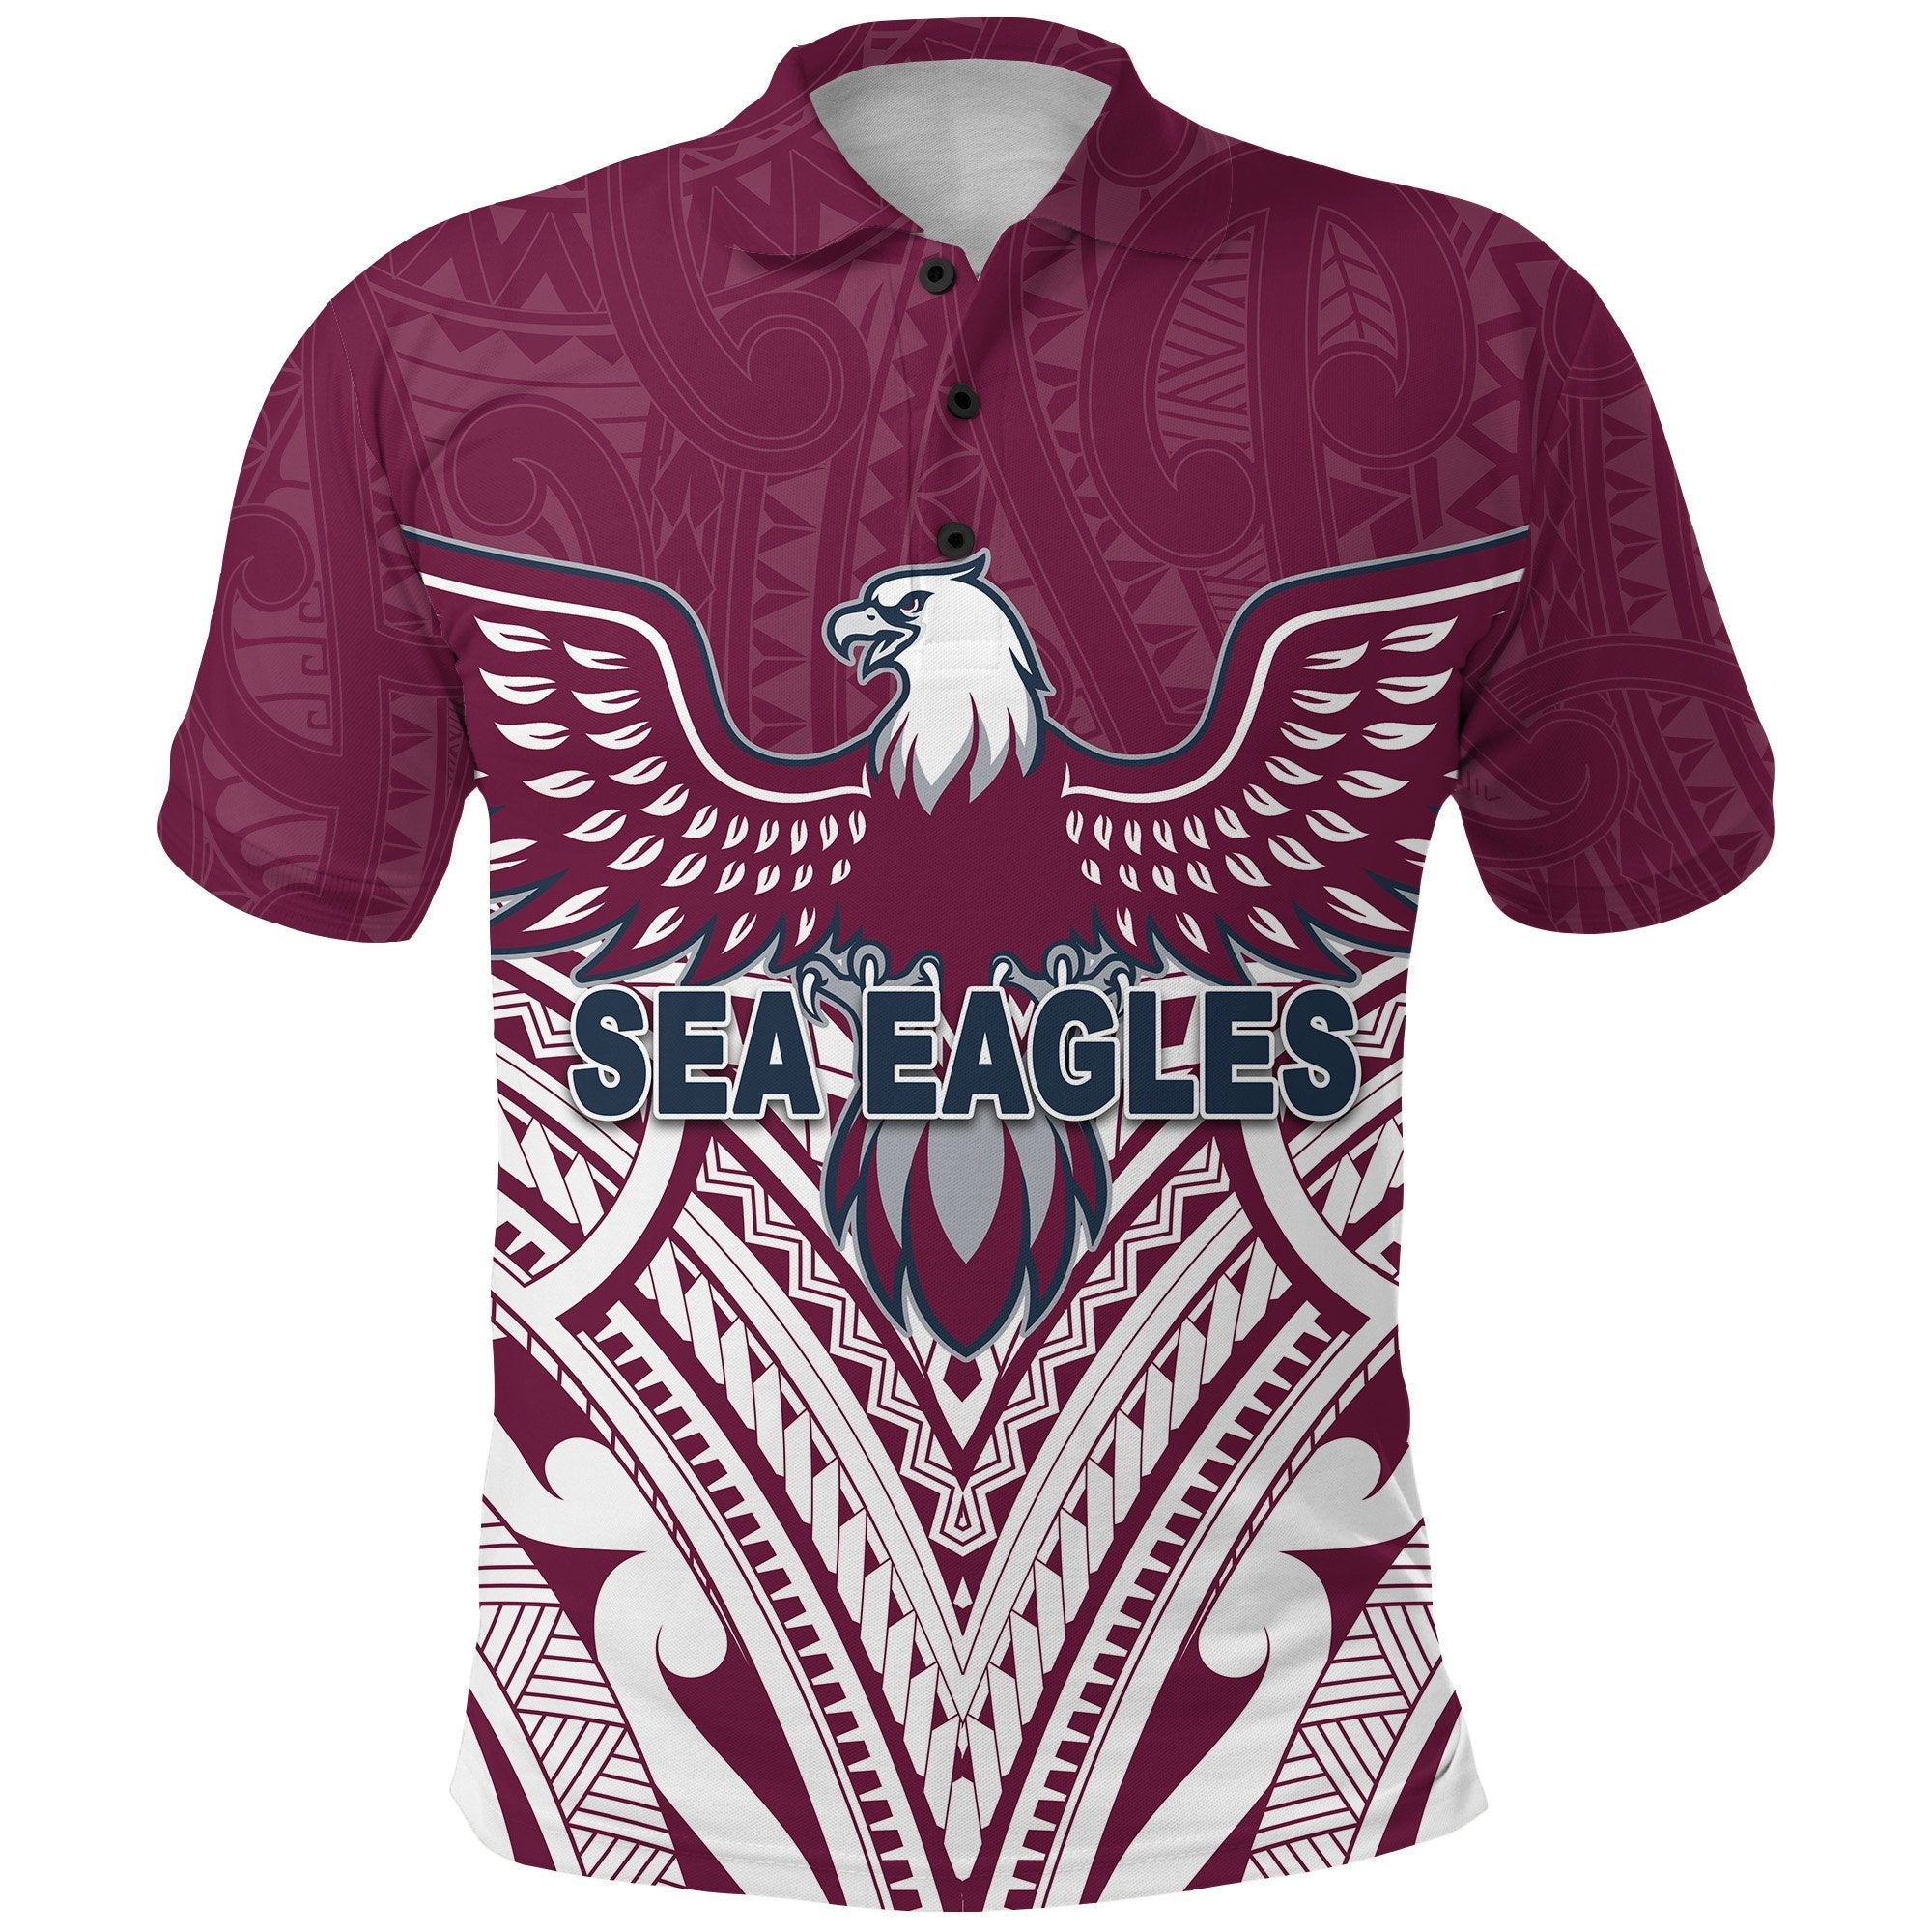 warringah-polo-shirt-sea-eagles-multicultural